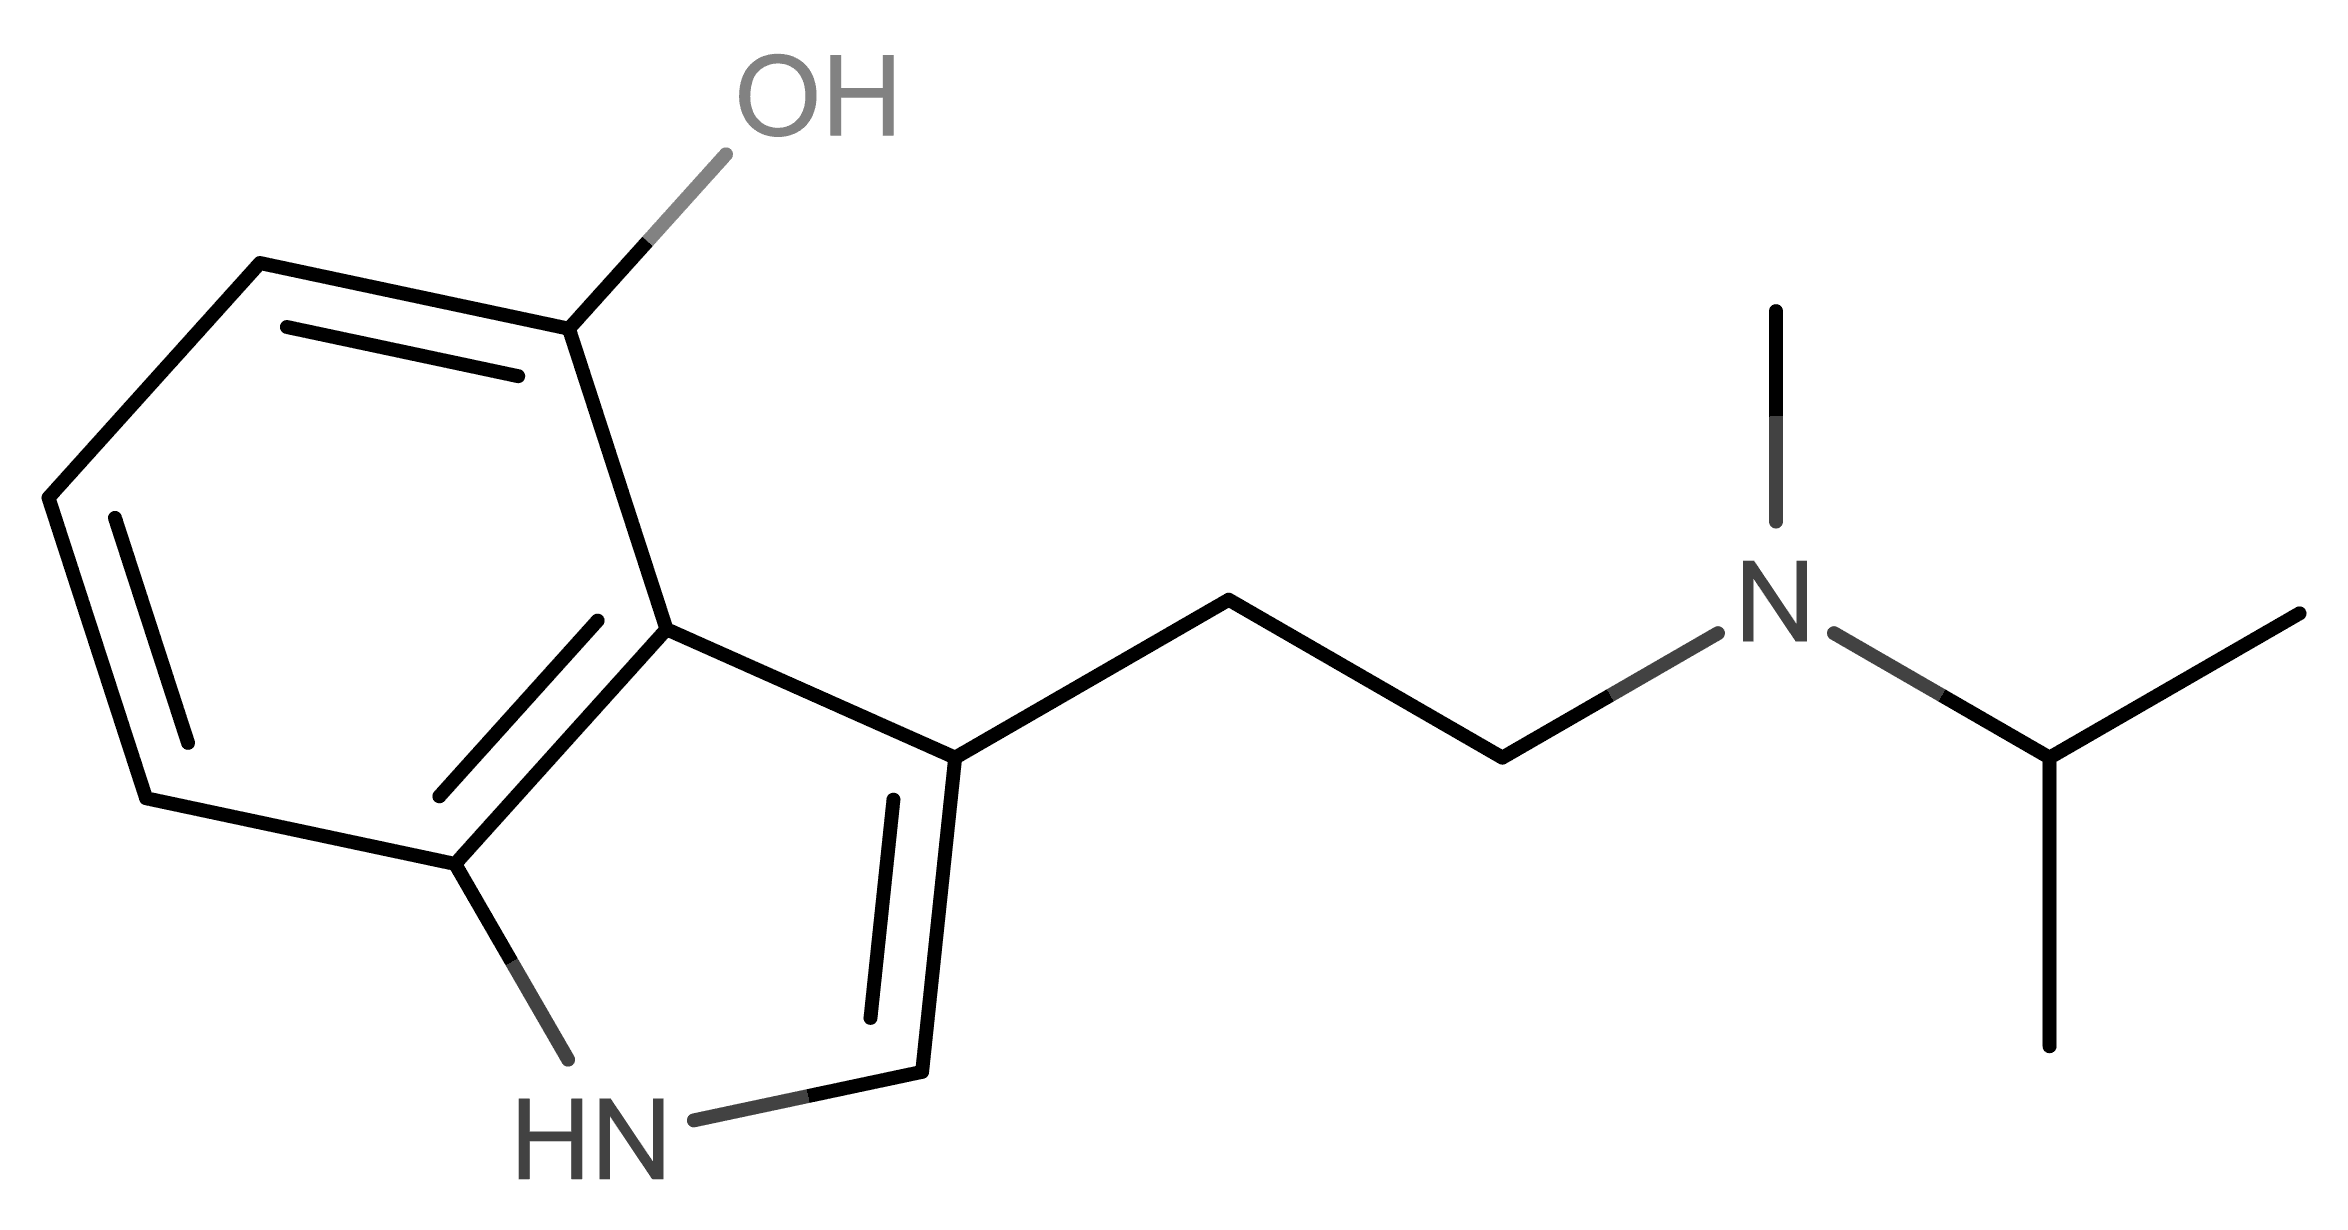 4-HO-MiPT molecular scheme